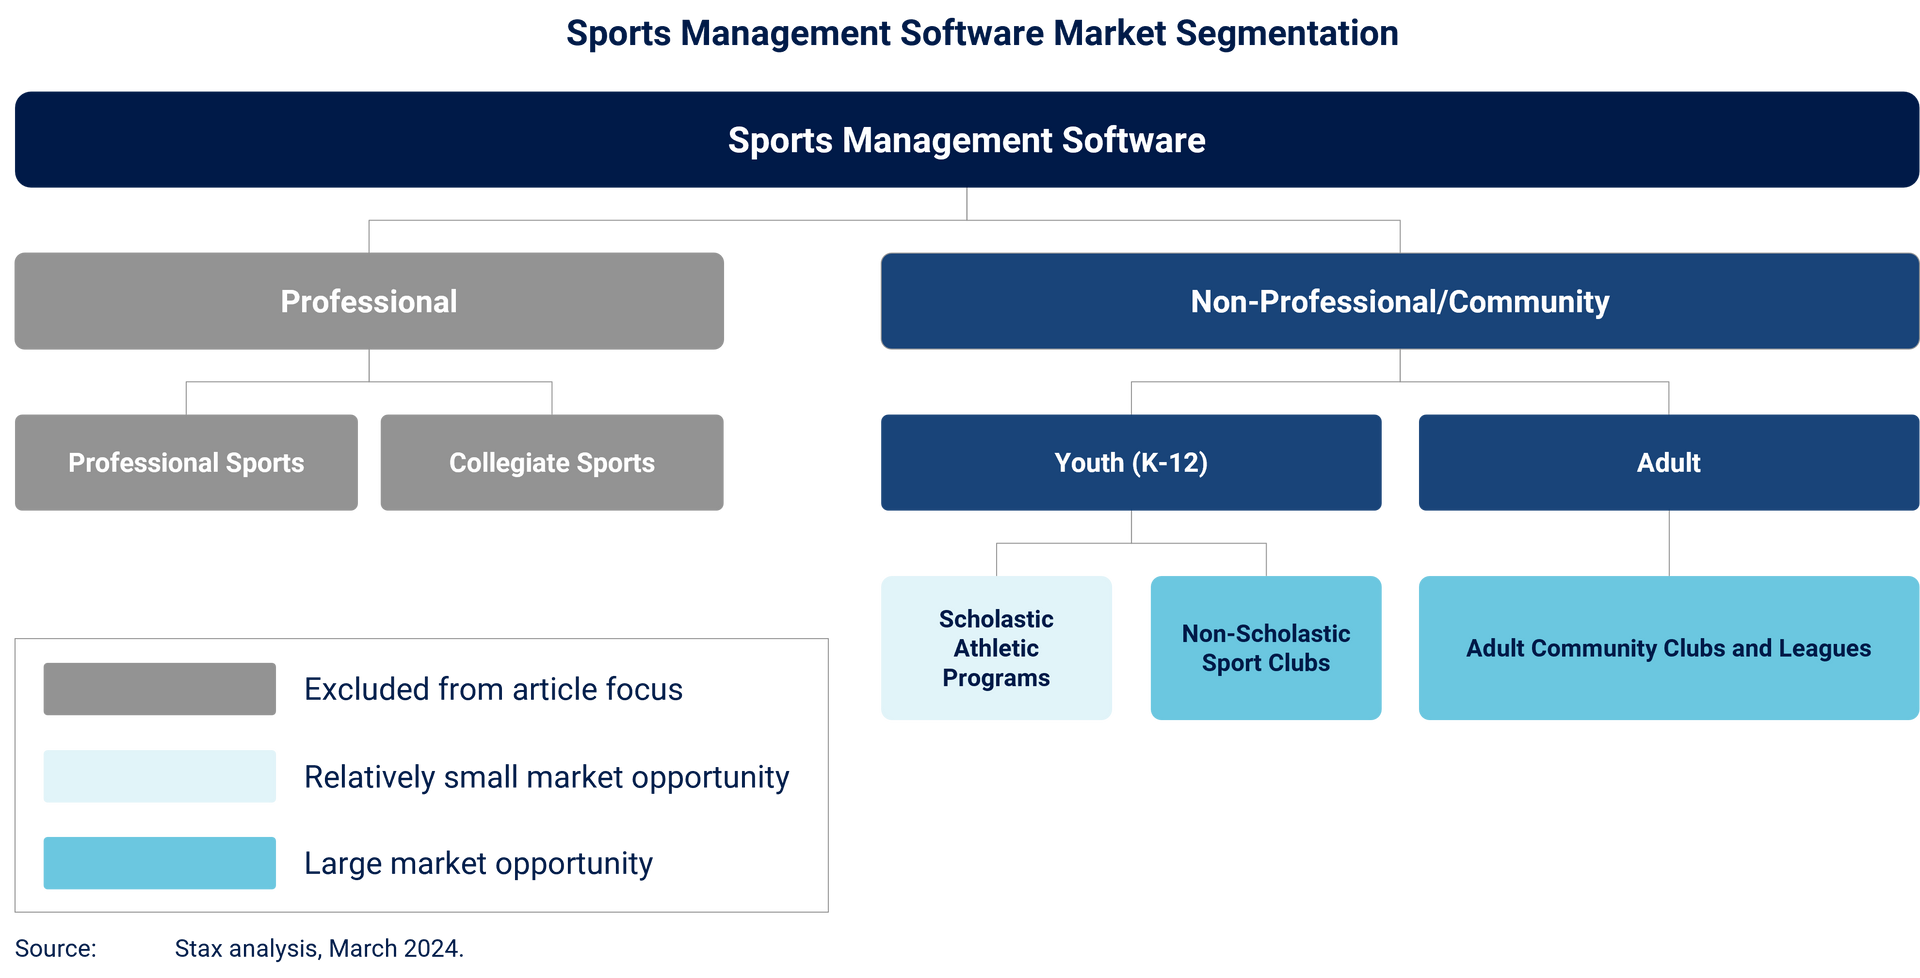 Sports management software market segmentation graphic.